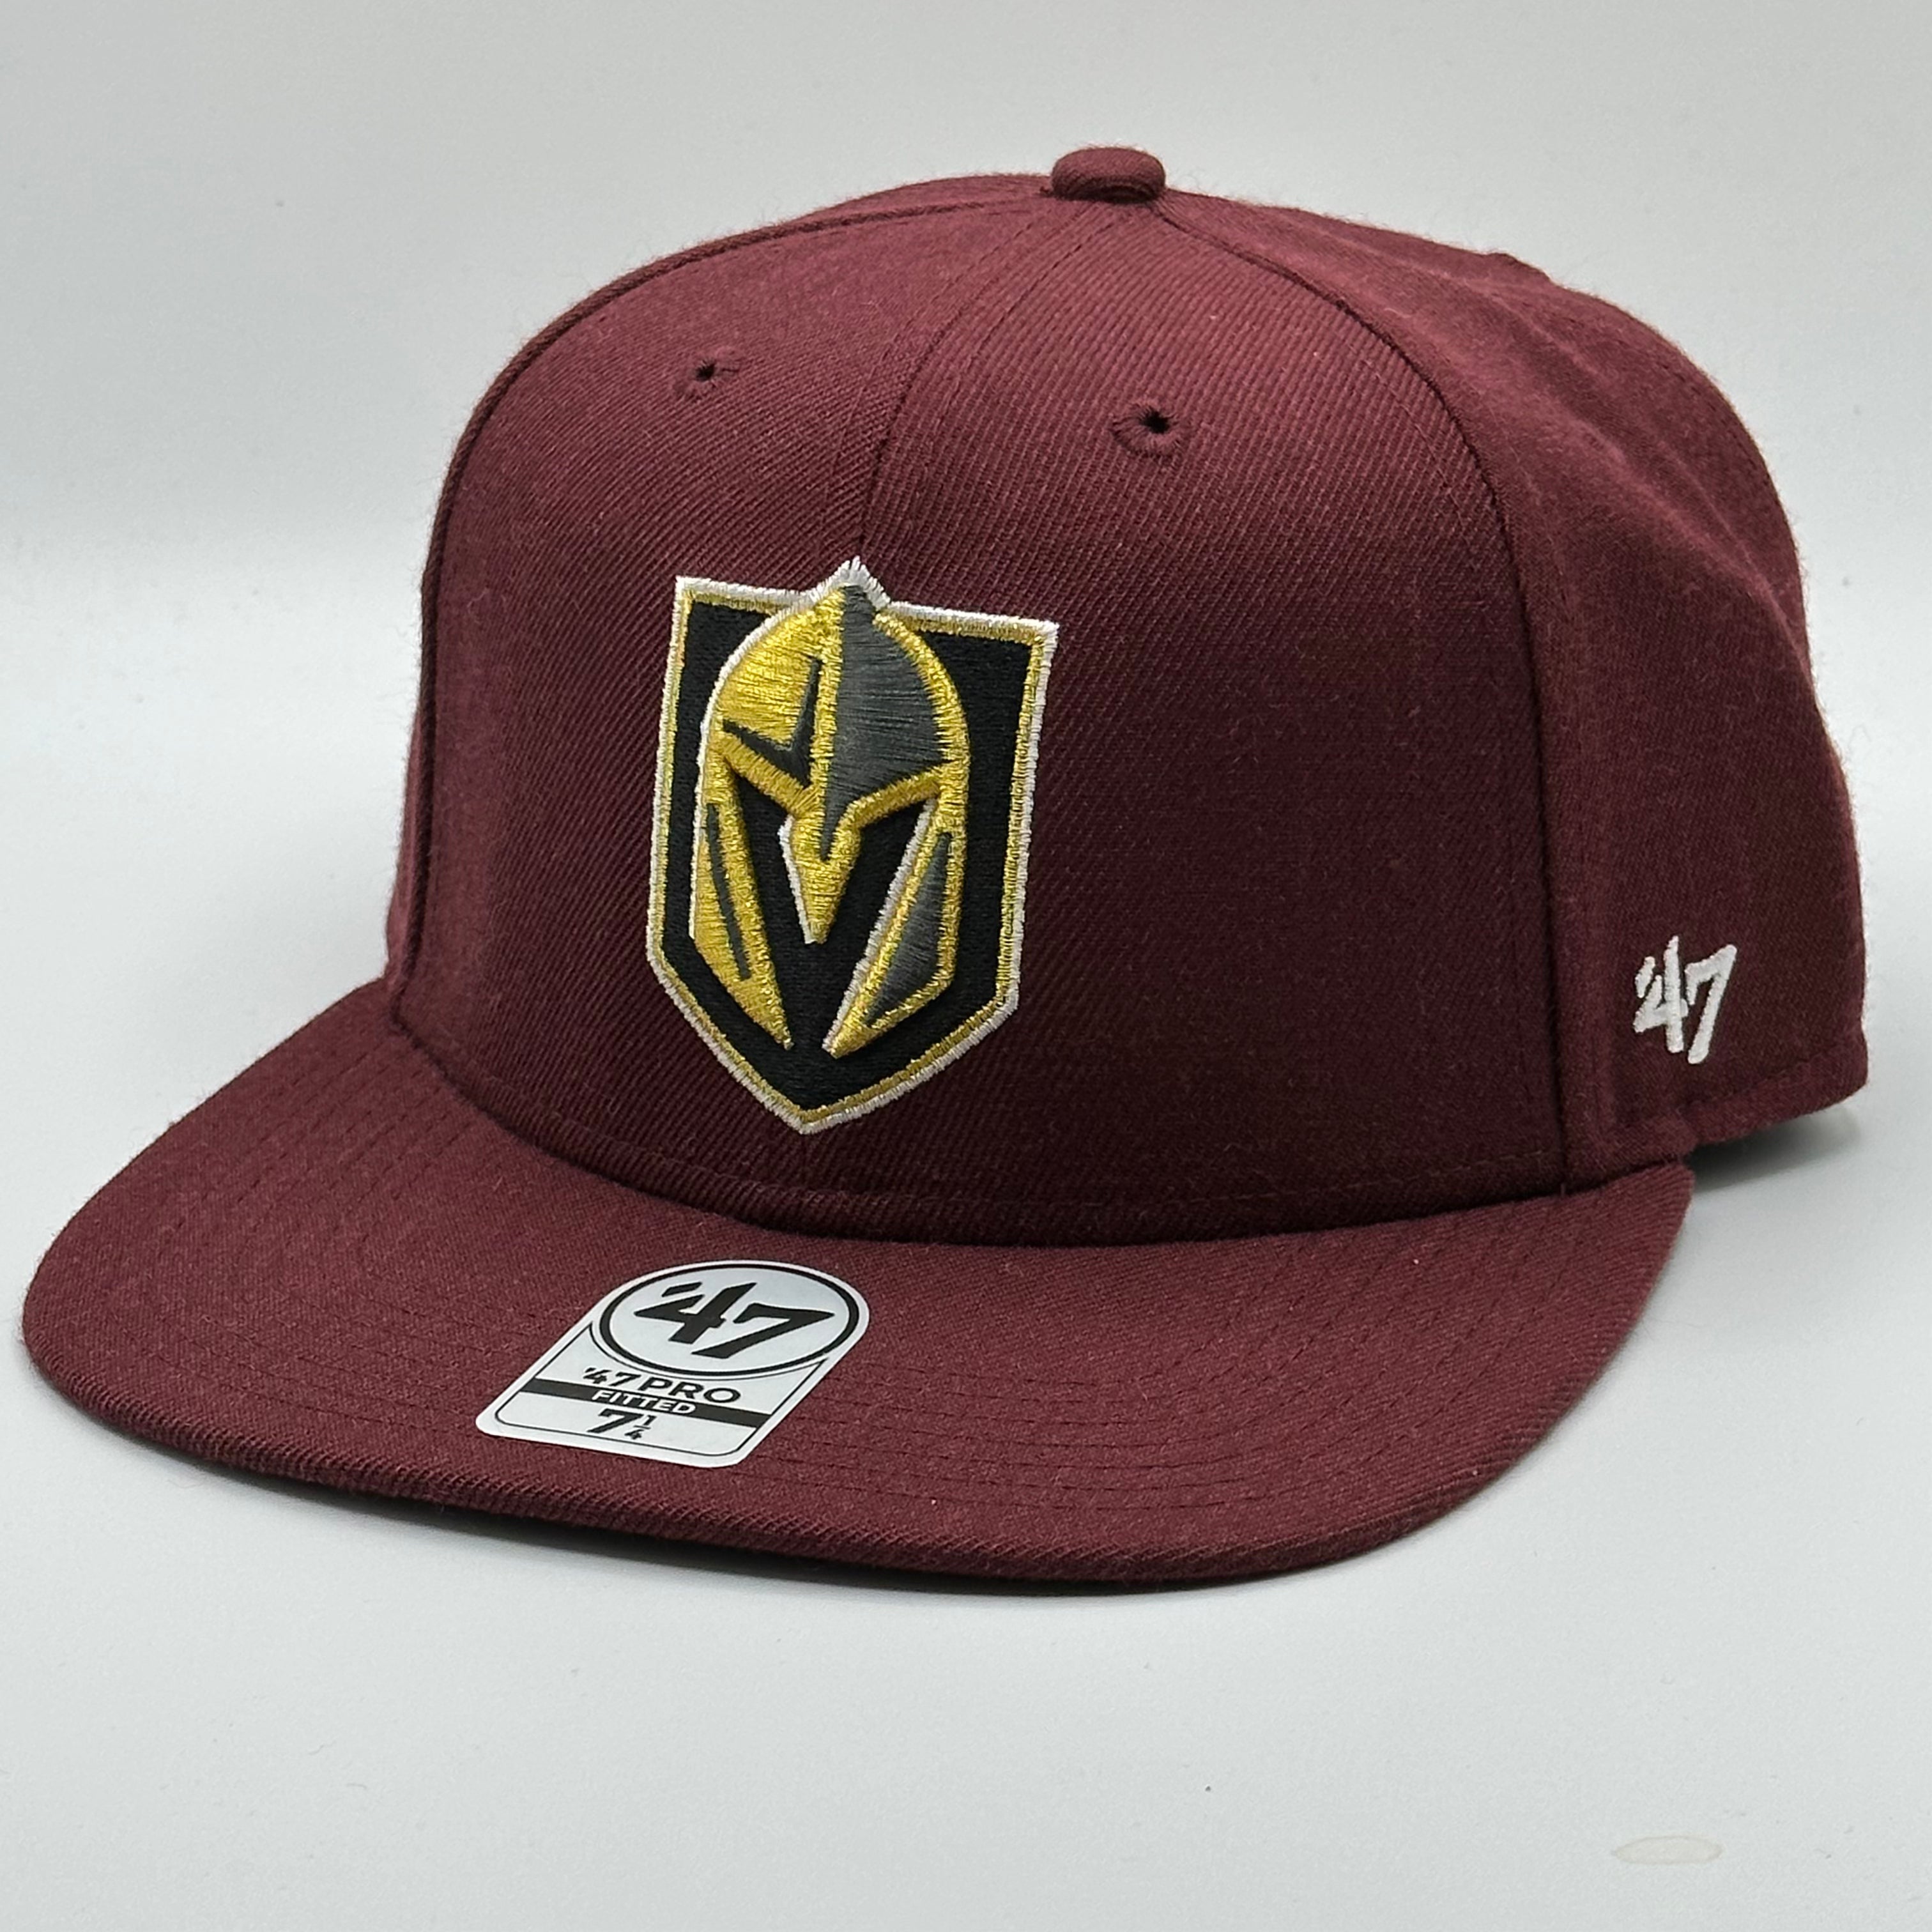 Original 6 NHL Team Hats  Officially Licensed Headwear